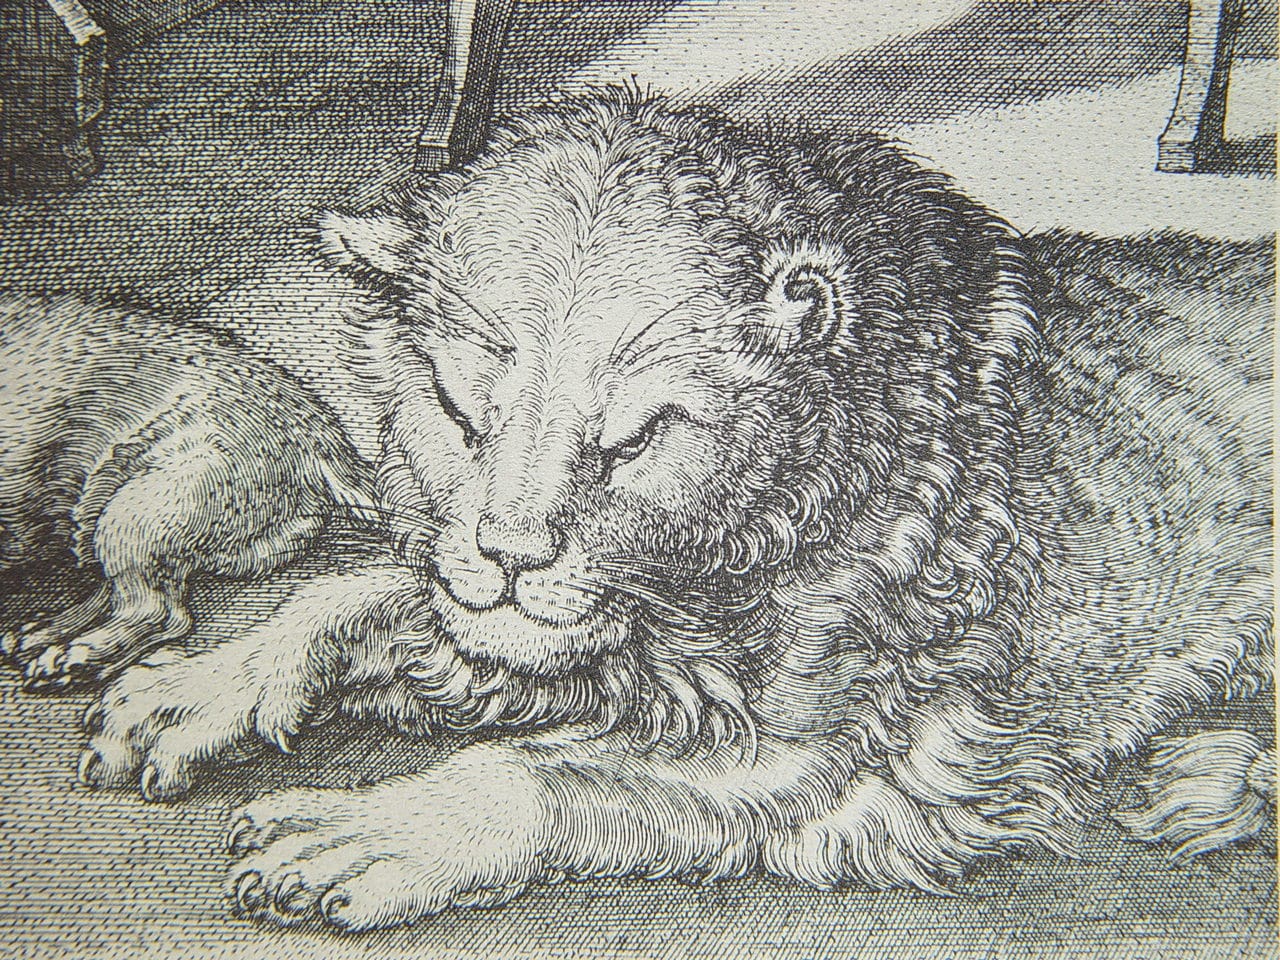 st. jerome close up of lion2